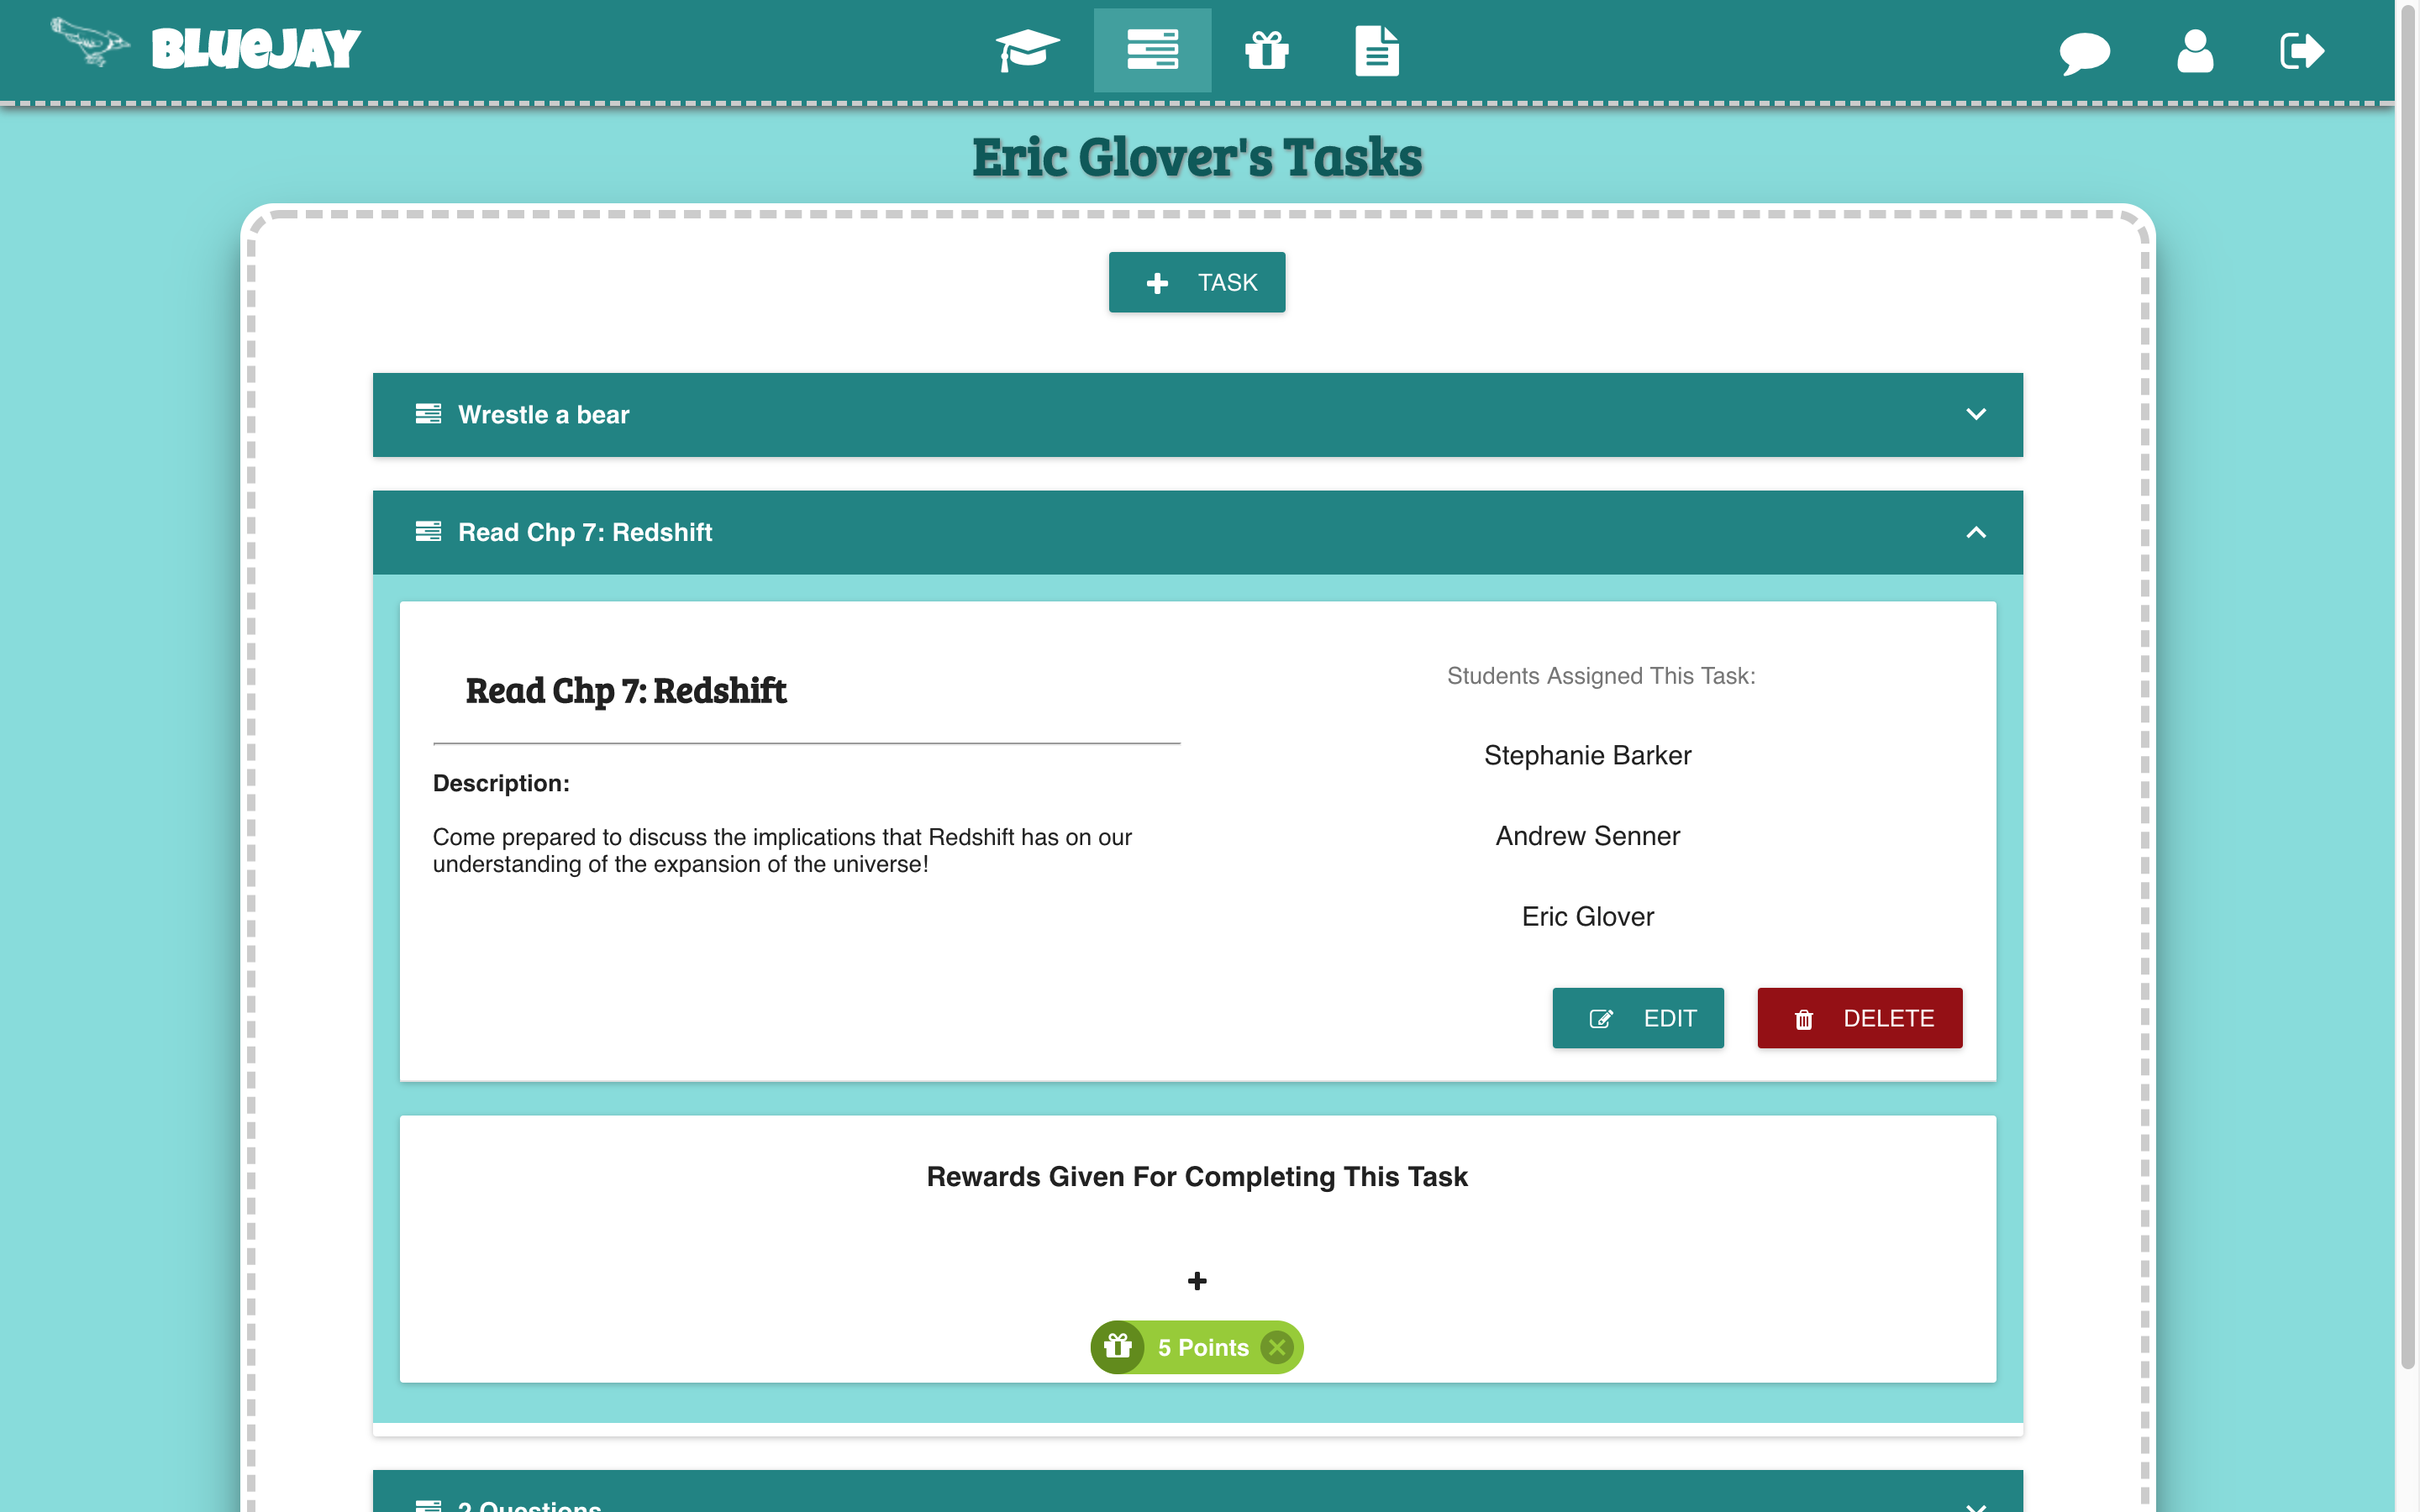 A website showing a view of different tasks teachers can assign